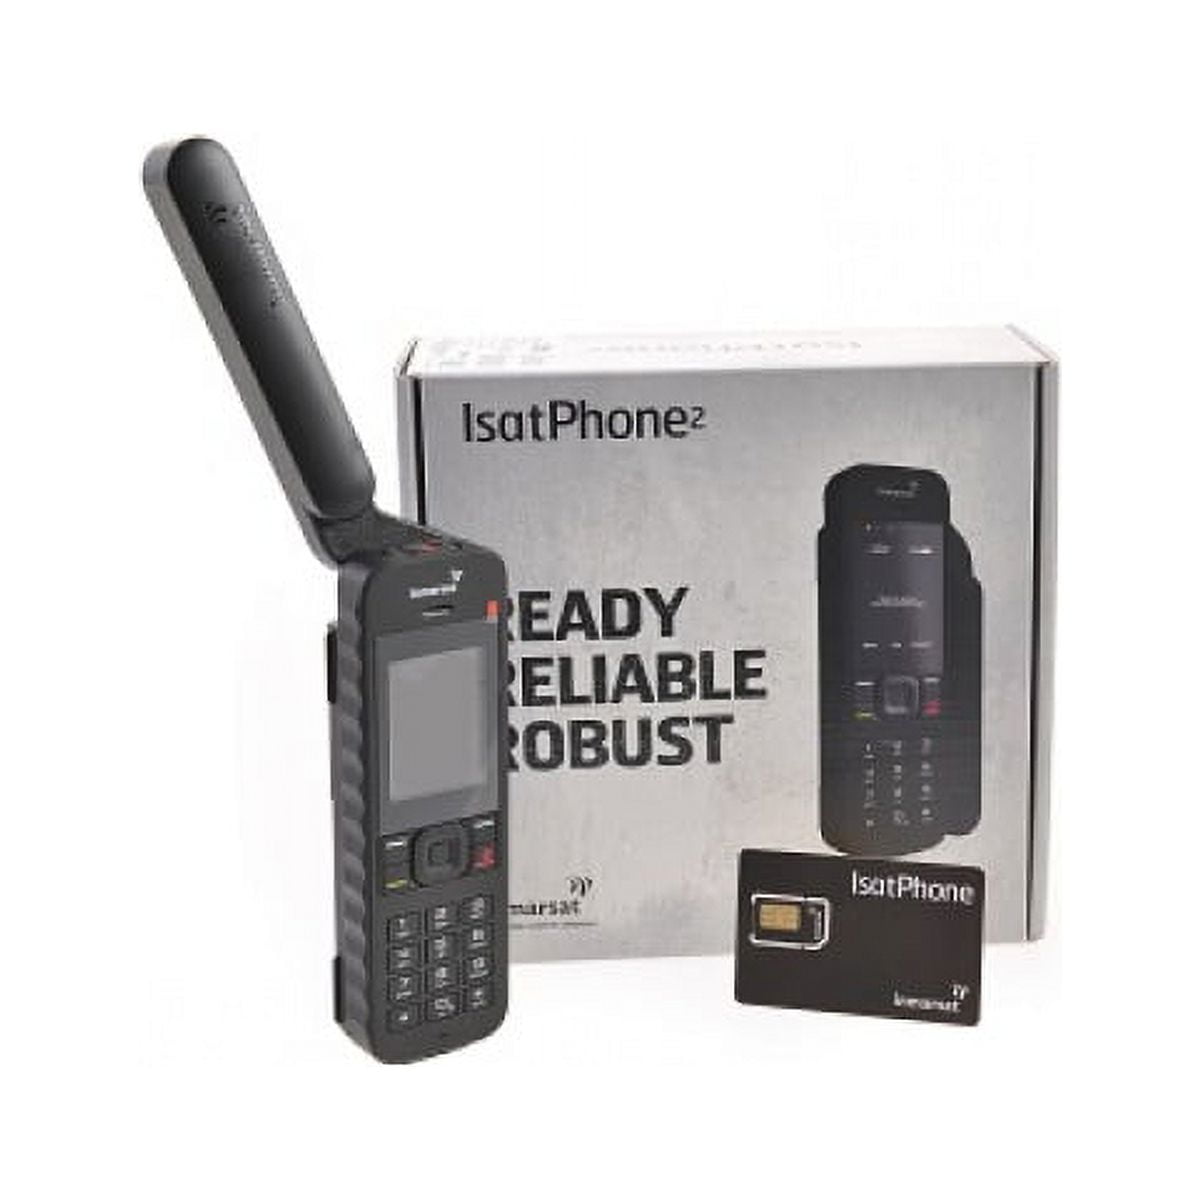 Inmarsat IsatPhone 2 - Satellite Phone with FREE SIM card and 100